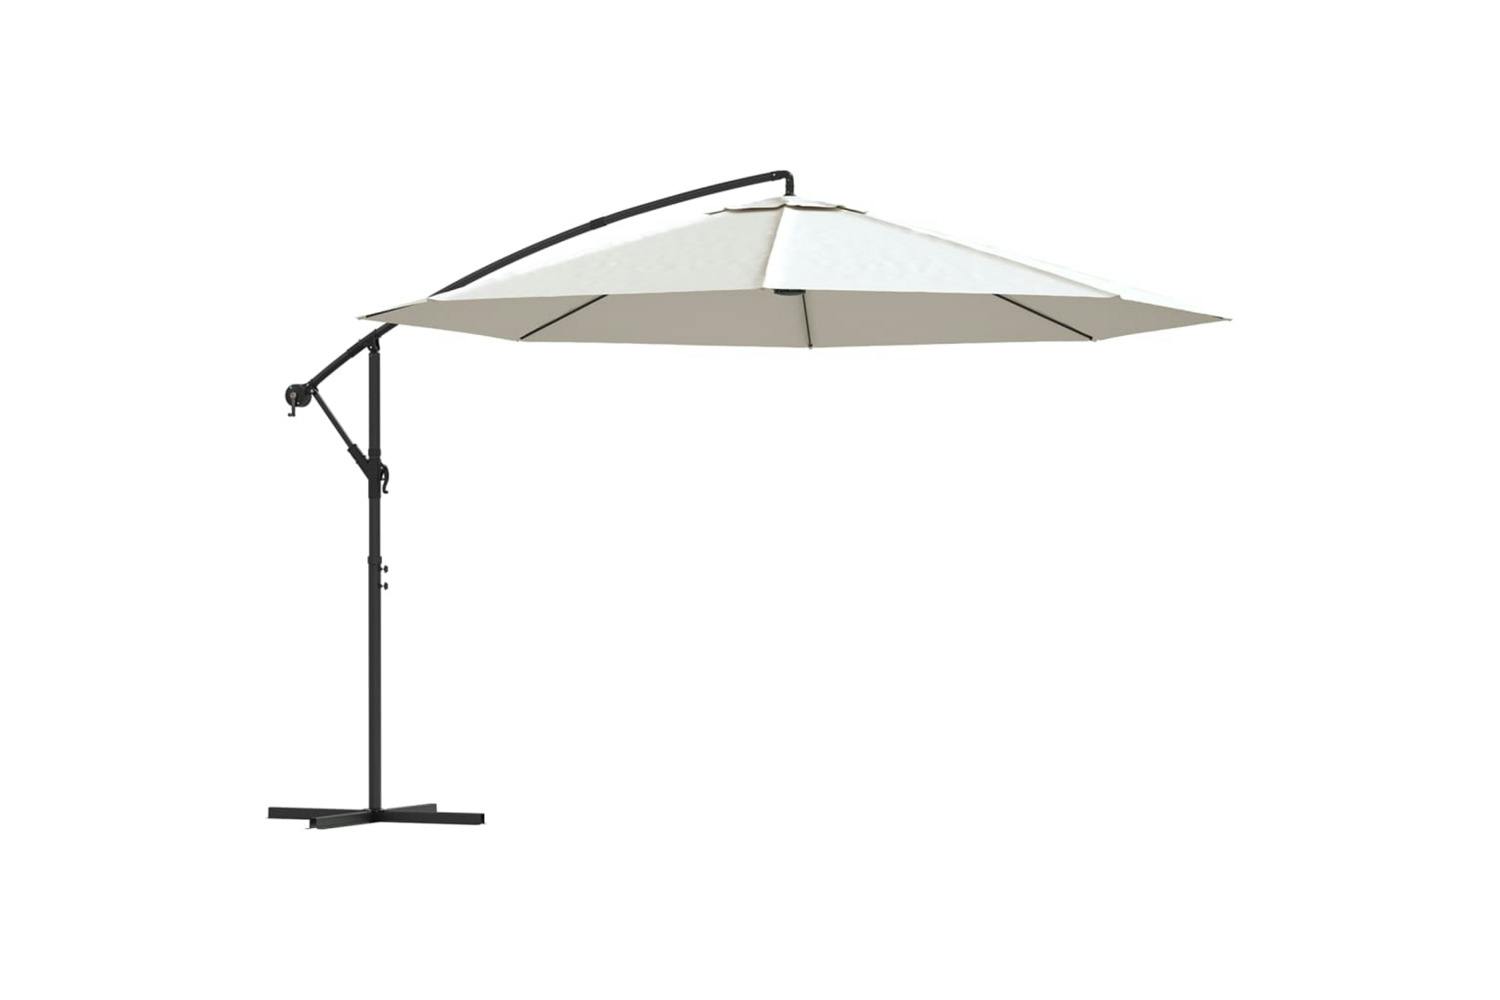 Vidaxl 42199 Cantilever Umbrella 3.5 M Sand White